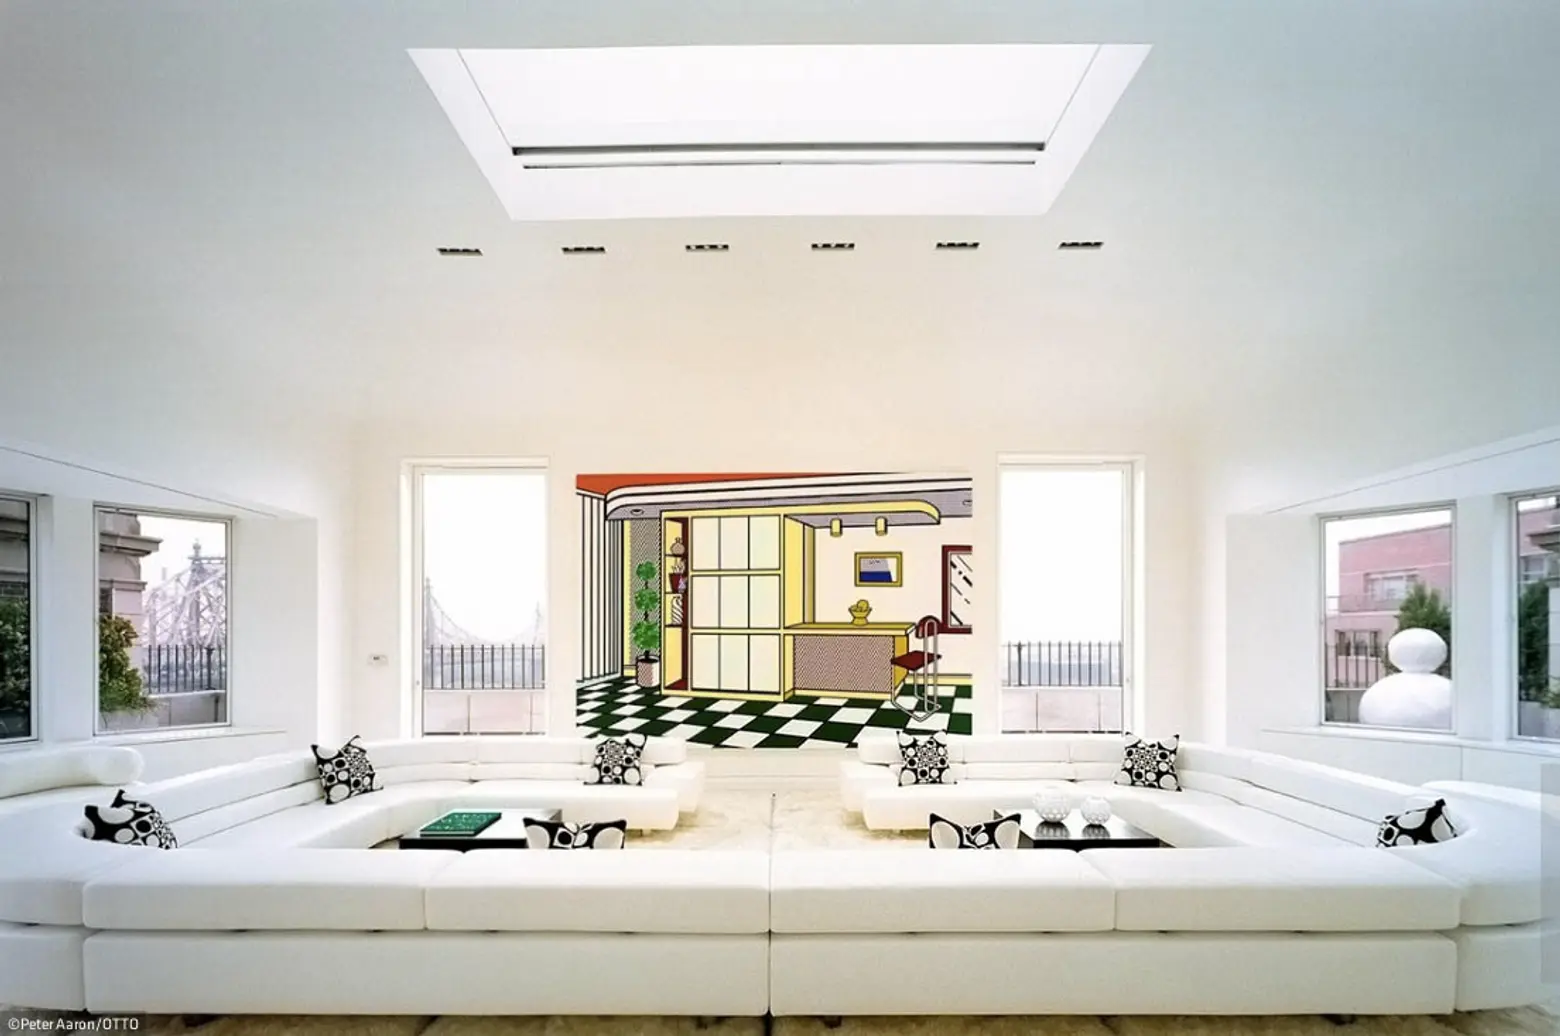 1100 Architect Transforms a Boring Midtown Loft into Their Client’s Pop Art Dream Home